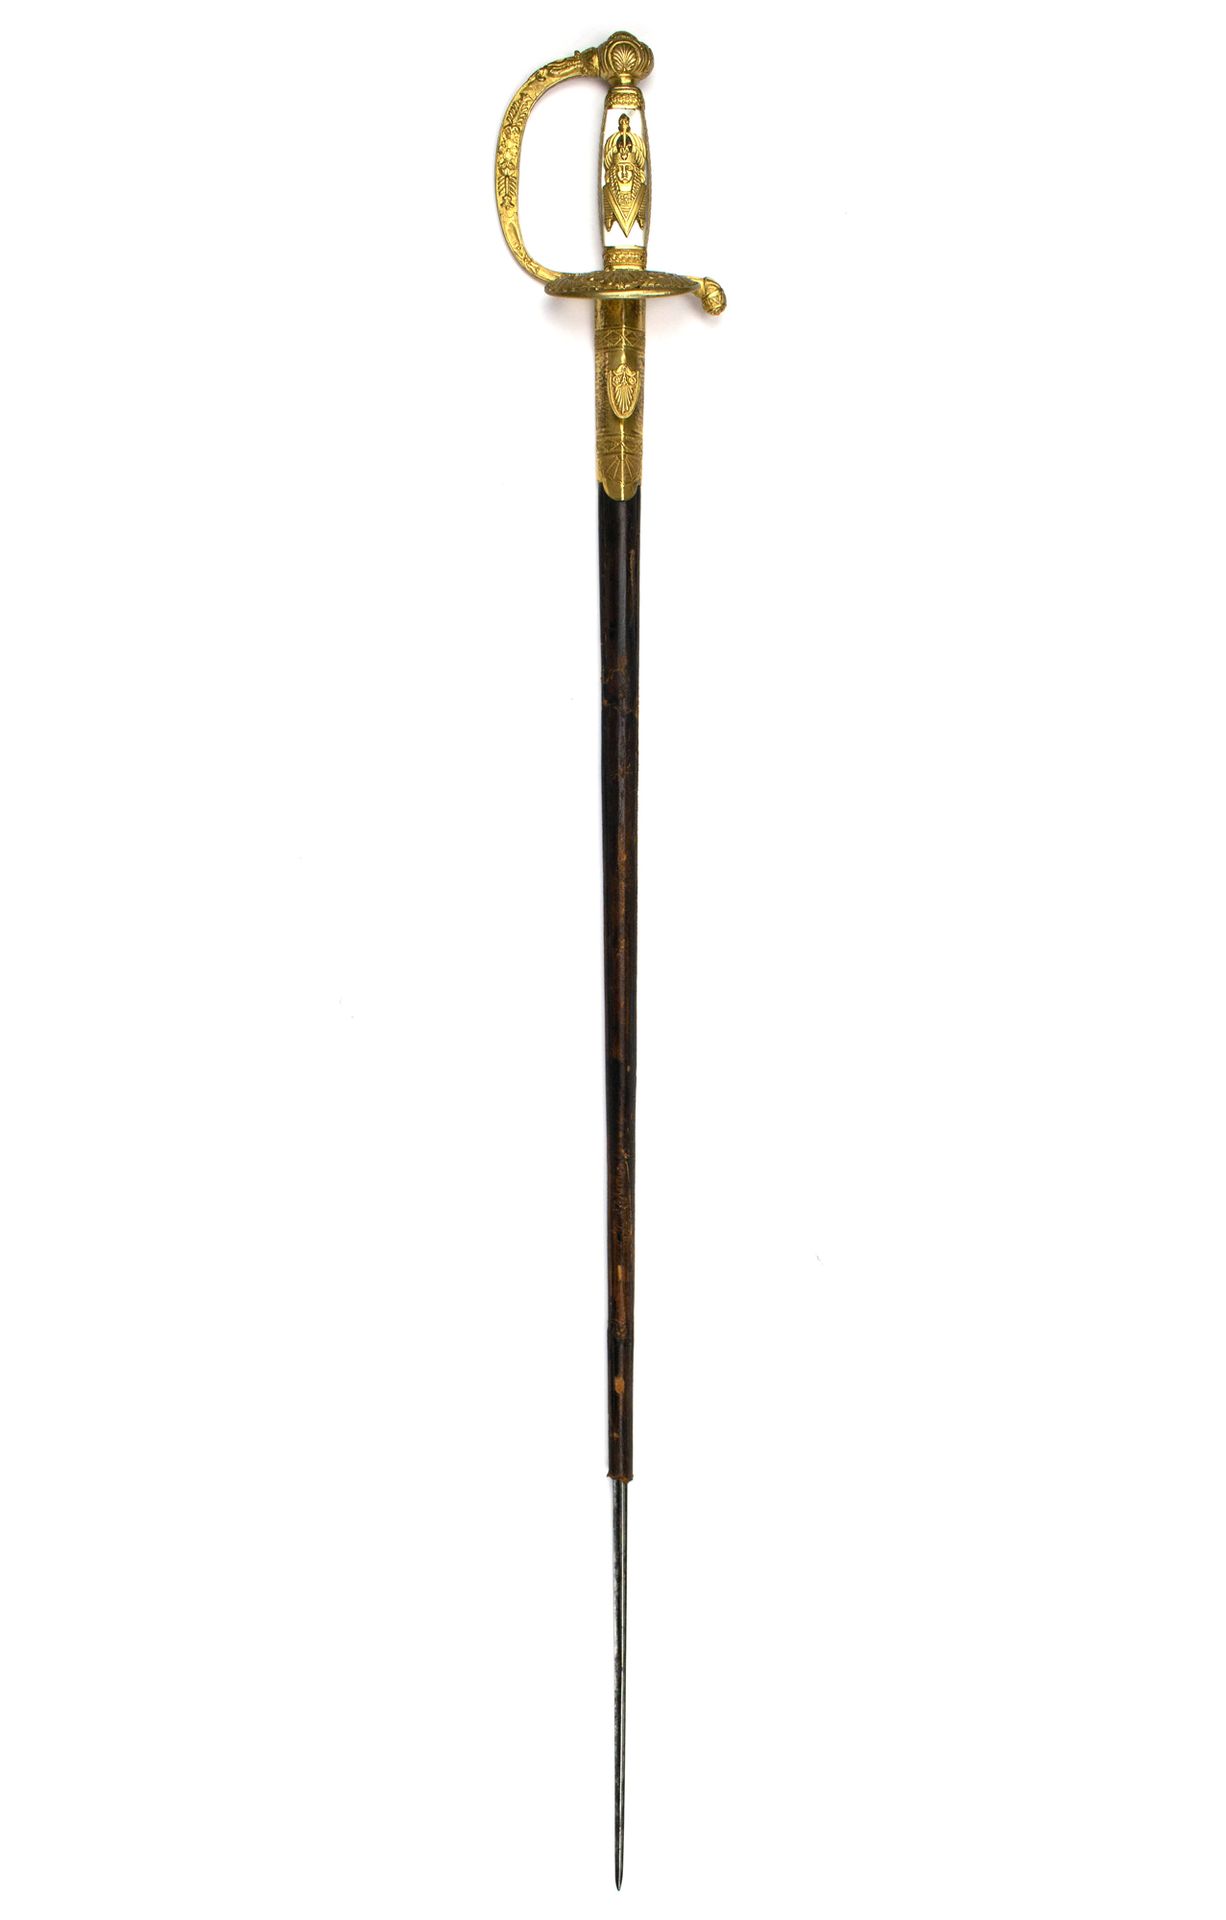 Null 
Espada del modelo de las espadas de academia de la época de la Restauració&hellip;